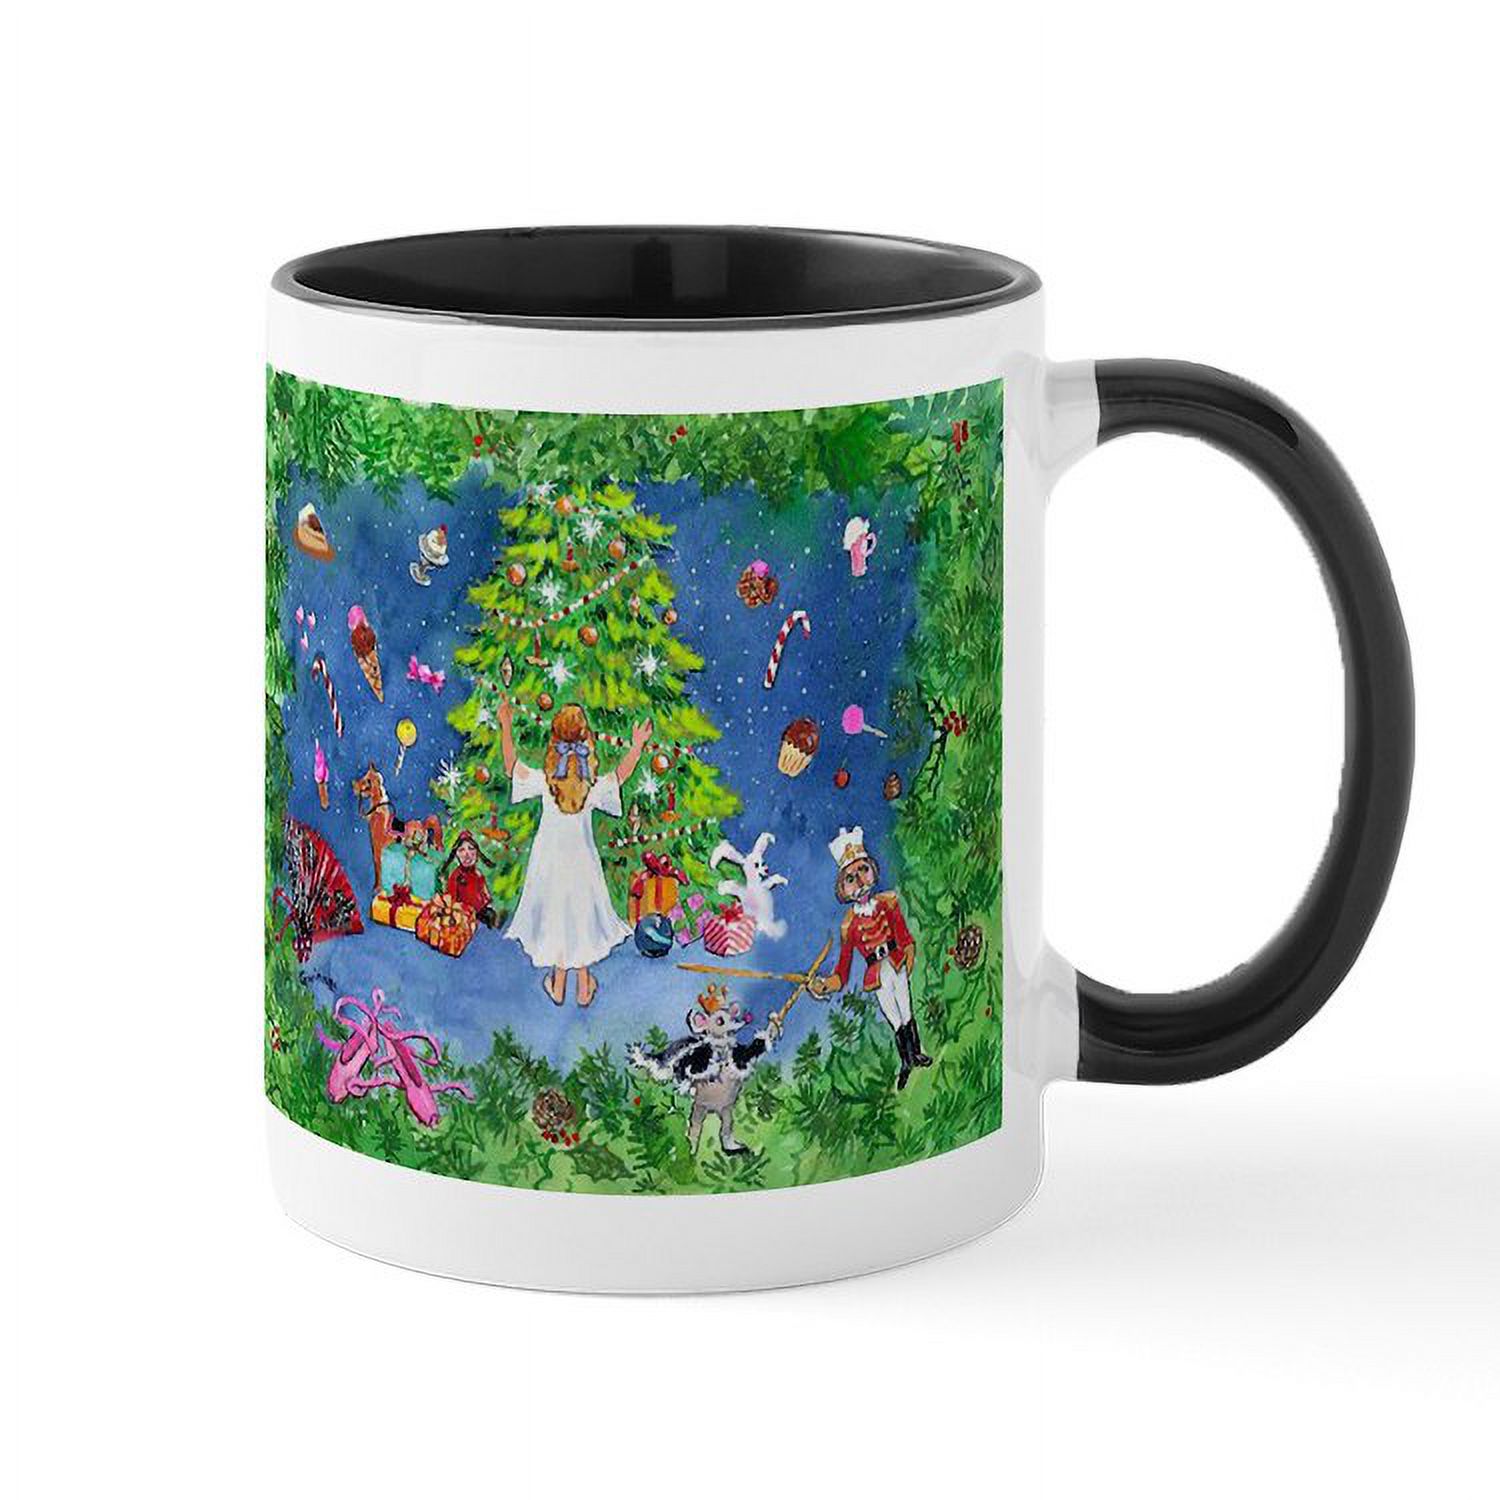 CafePress - Nutcracker Christmas Ballet Mug - 11 oz Ceramic Mug - Novelty Coffee Tea Cup - image 1 of 4